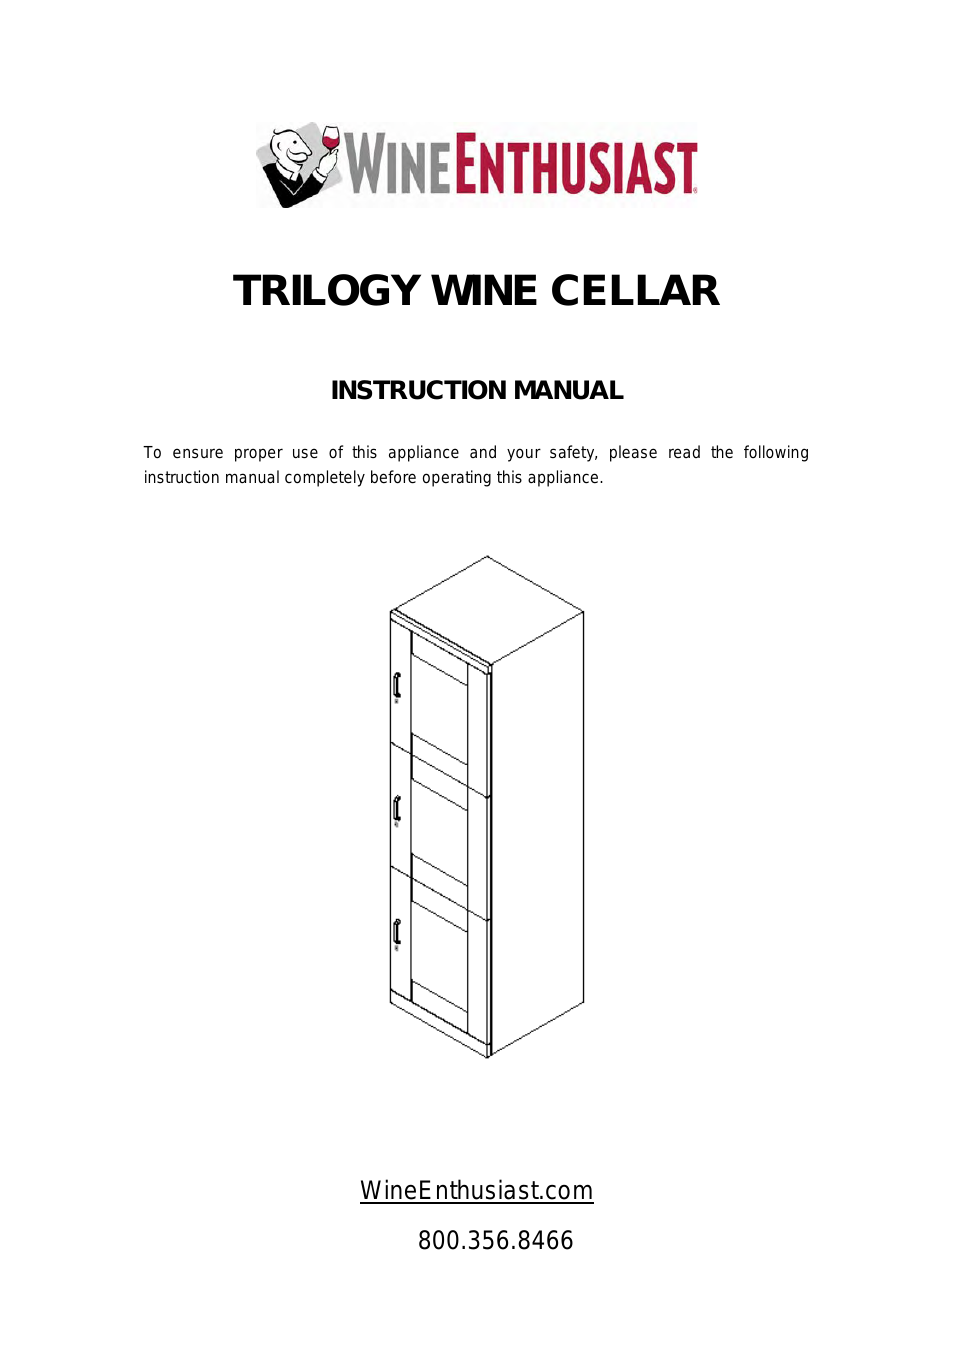 Trilogy Wine Cellar